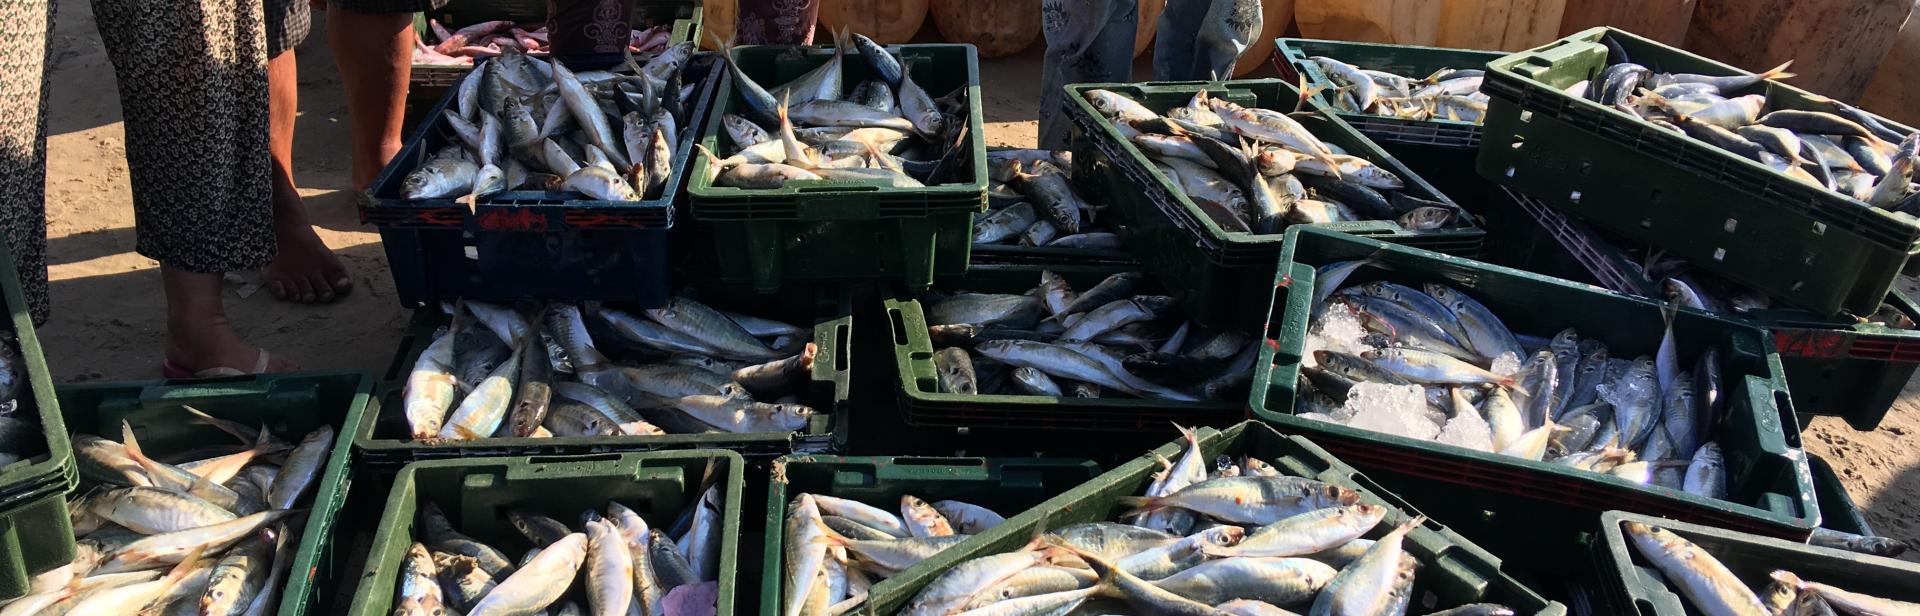 Vietnam fishing market